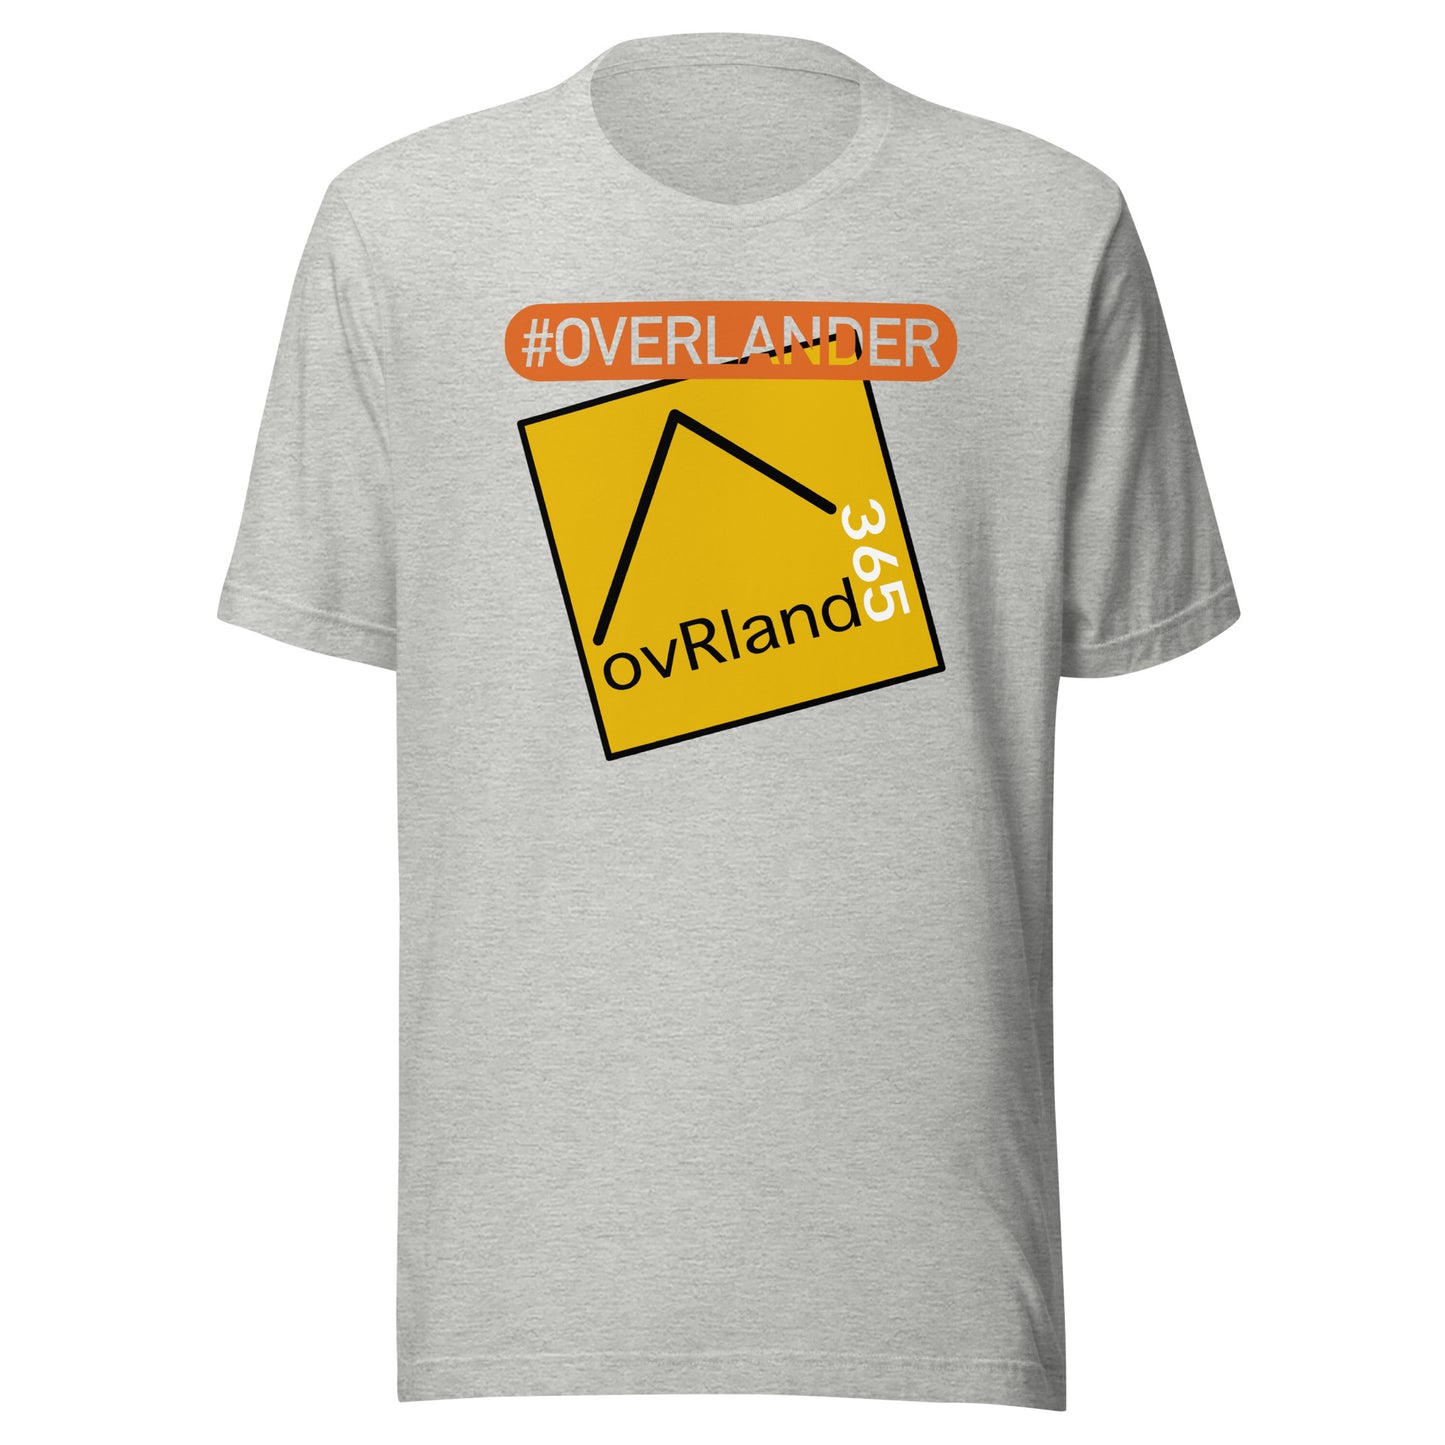 #overlander overlanding t-shirt, light grey. overland365.com